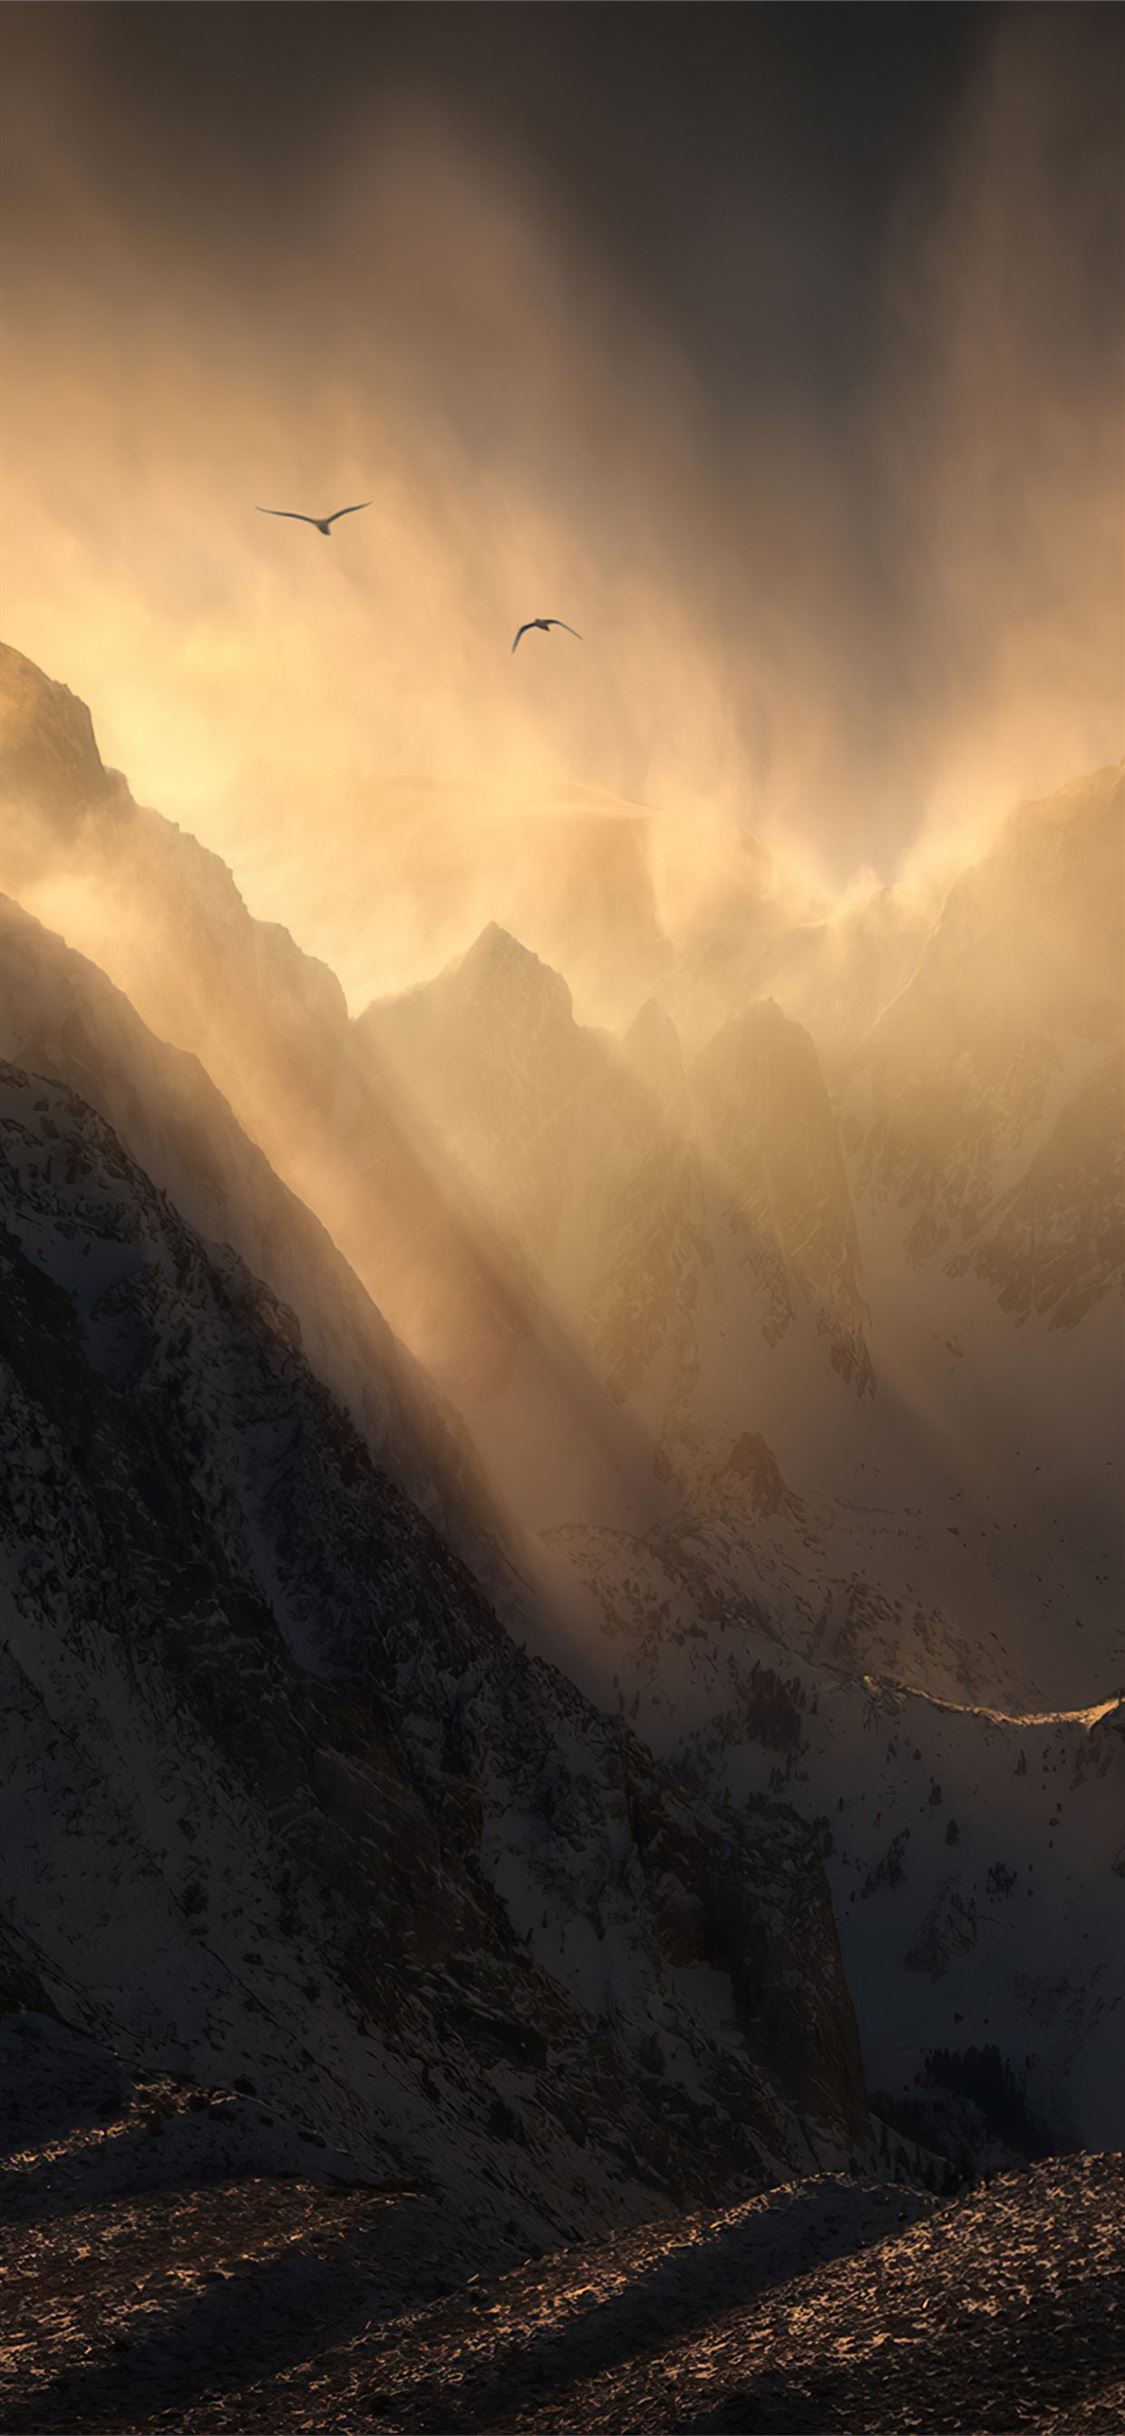 snow mountains sierra california 4k iPhone X Wallpaper Free Download